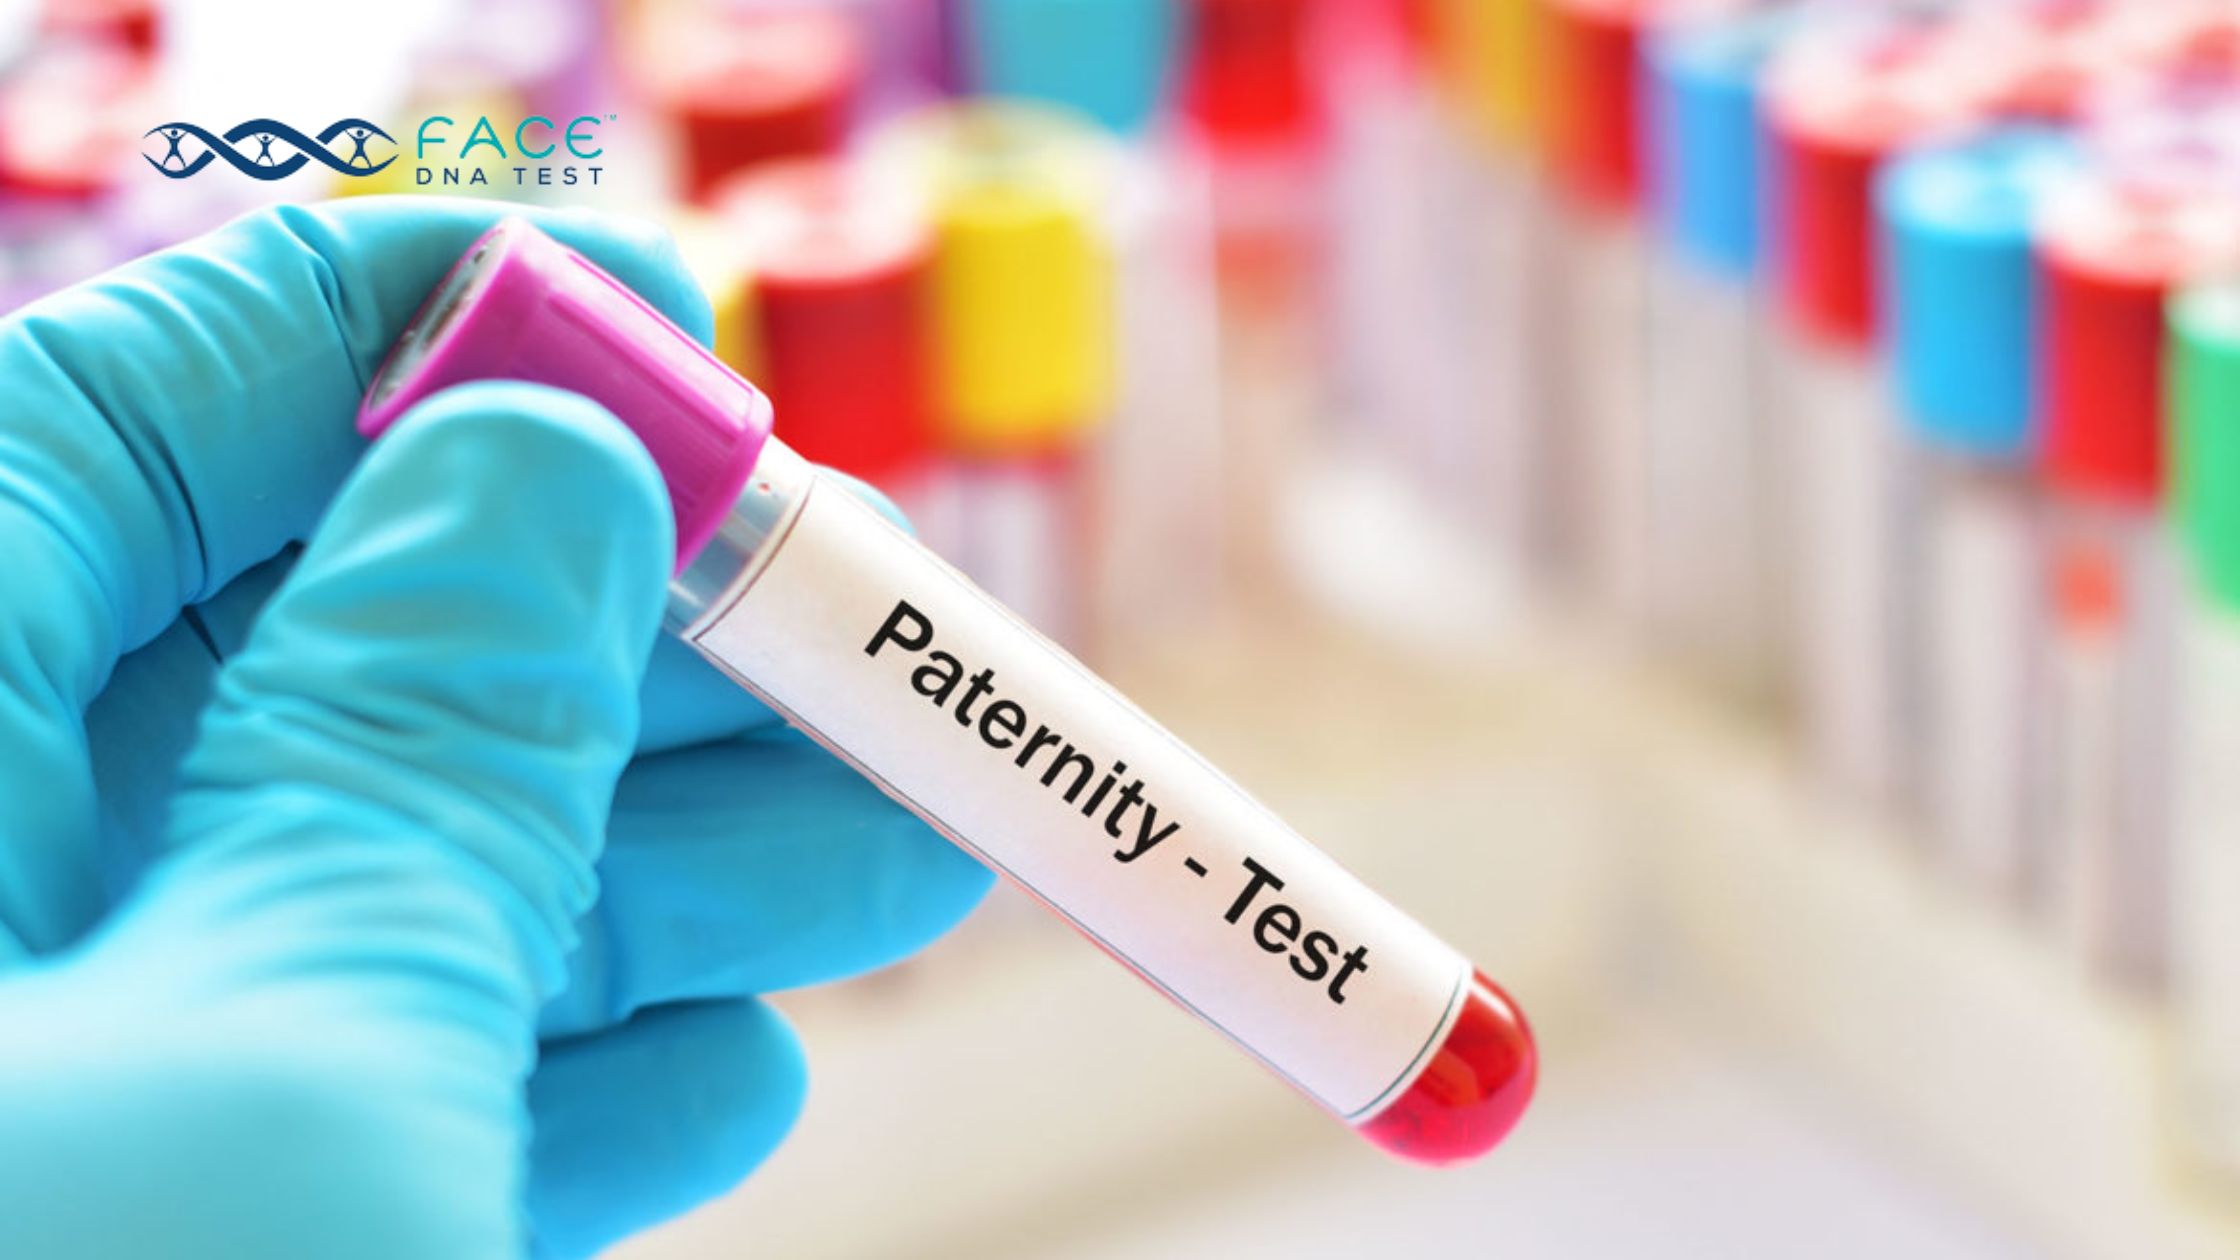 Paternity Test